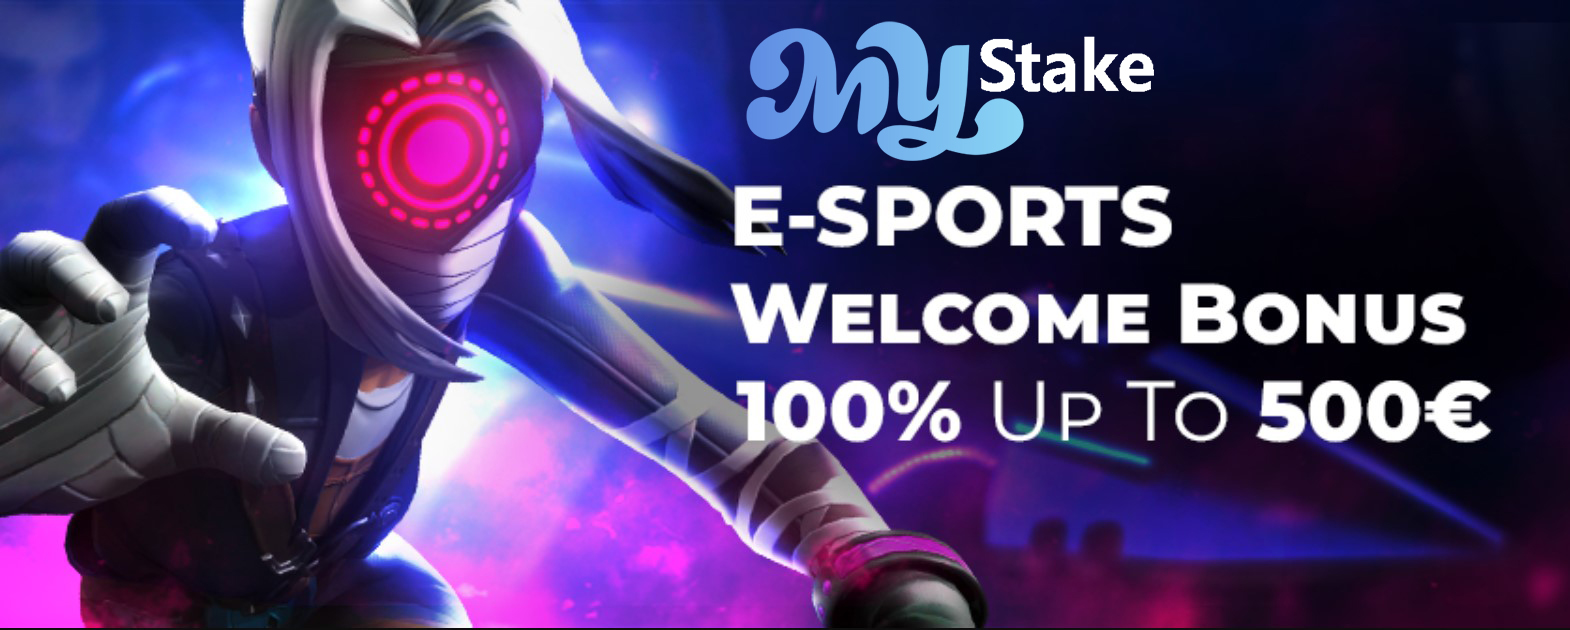 eSport Welcome Bonus 100% Up To 500€